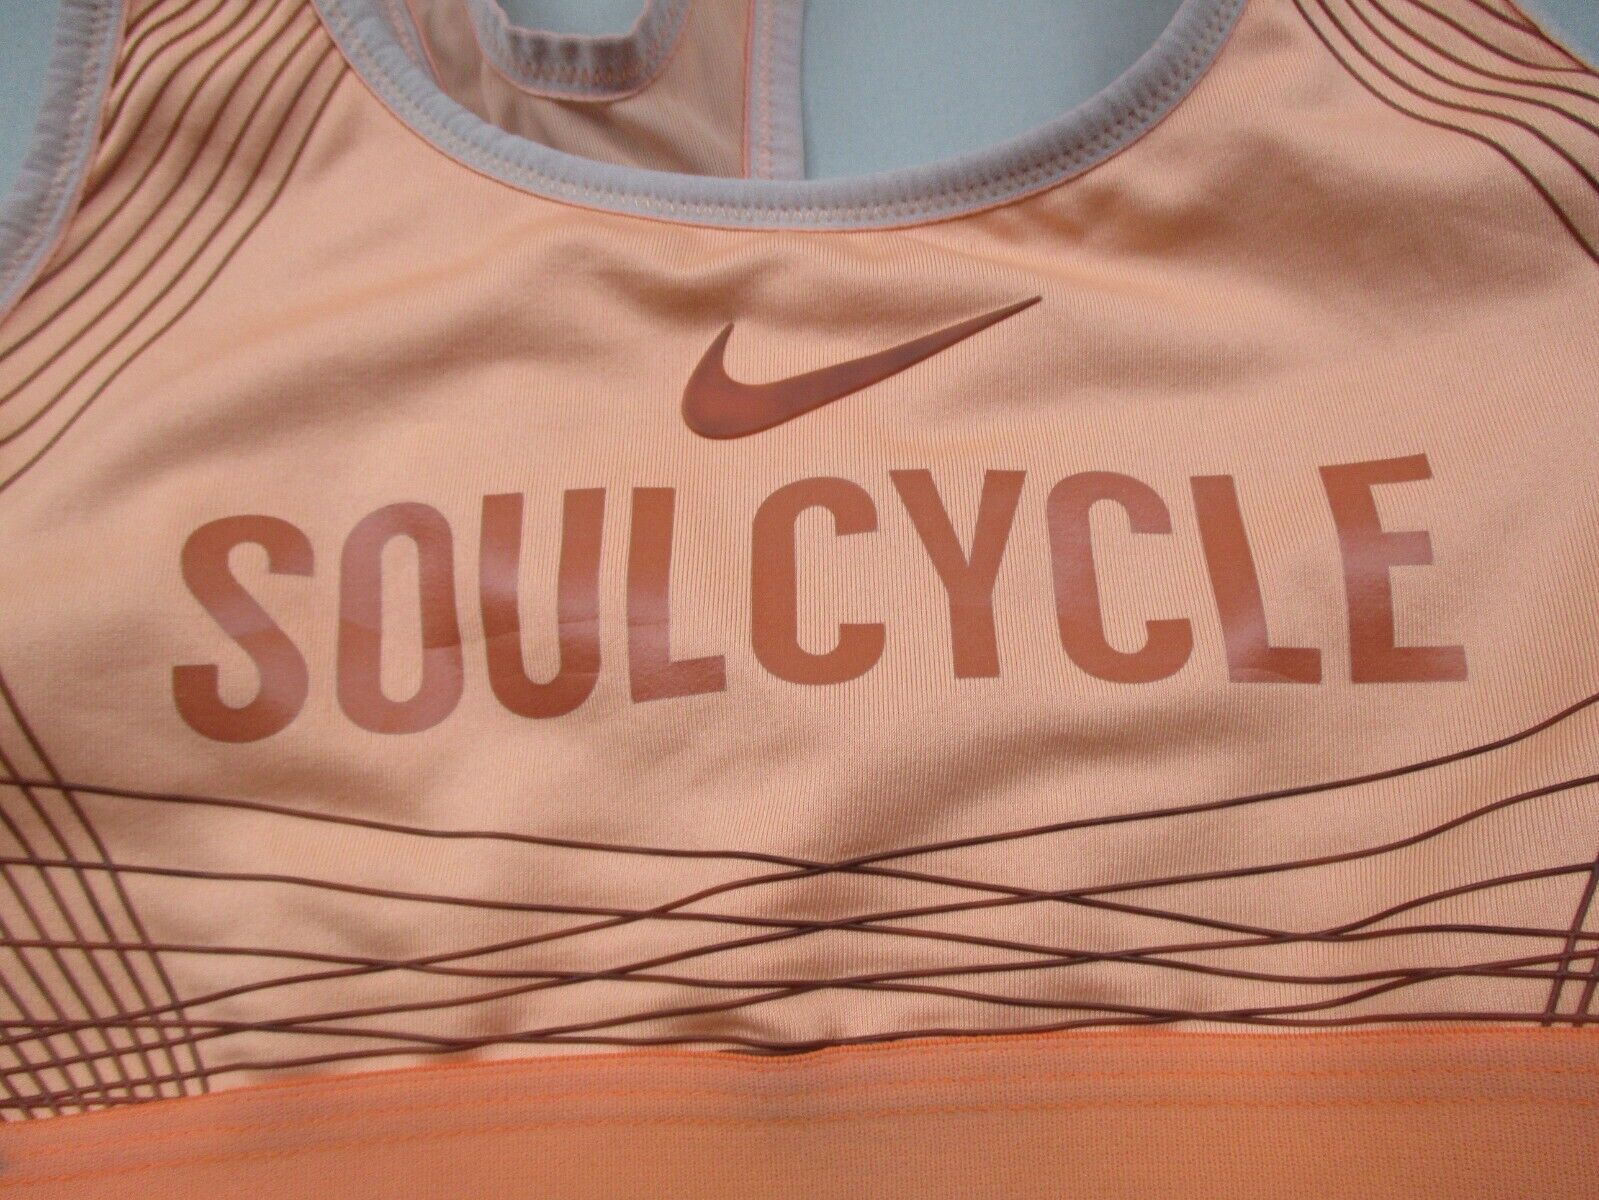 Nike Girls Activewear Athletics Soul Cycle Sports Bra Sleeveless